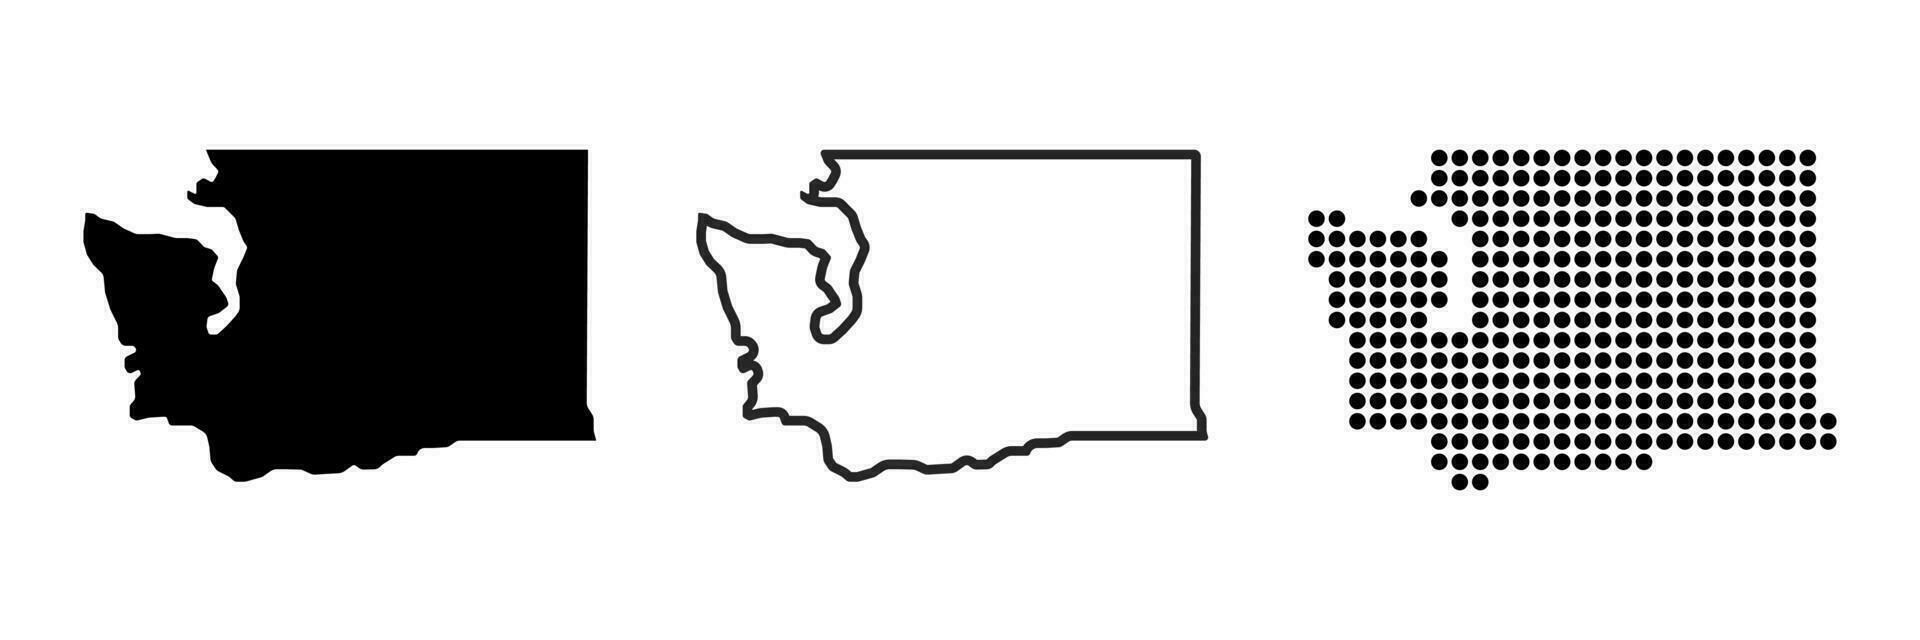 Washington state map contour. Washington state map. Glyph and outline Washington map. US state map. vector